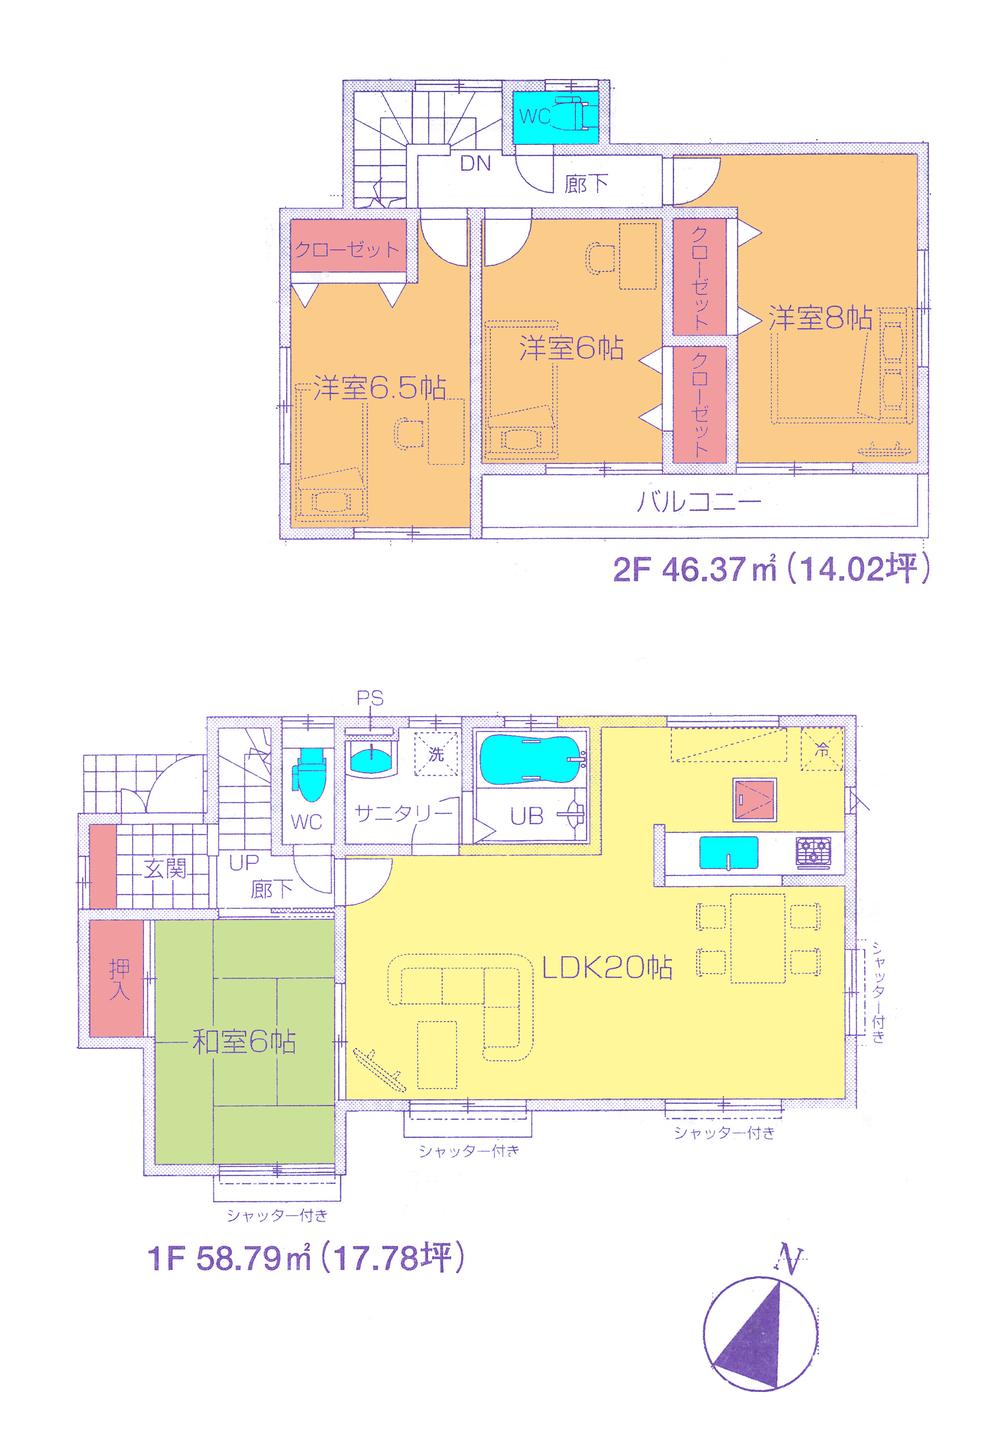 Floor plan. (4 Building), Price 24,800,000 yen, 4LDK, Land area 200.1 sq m , Building area 105.16 sq m